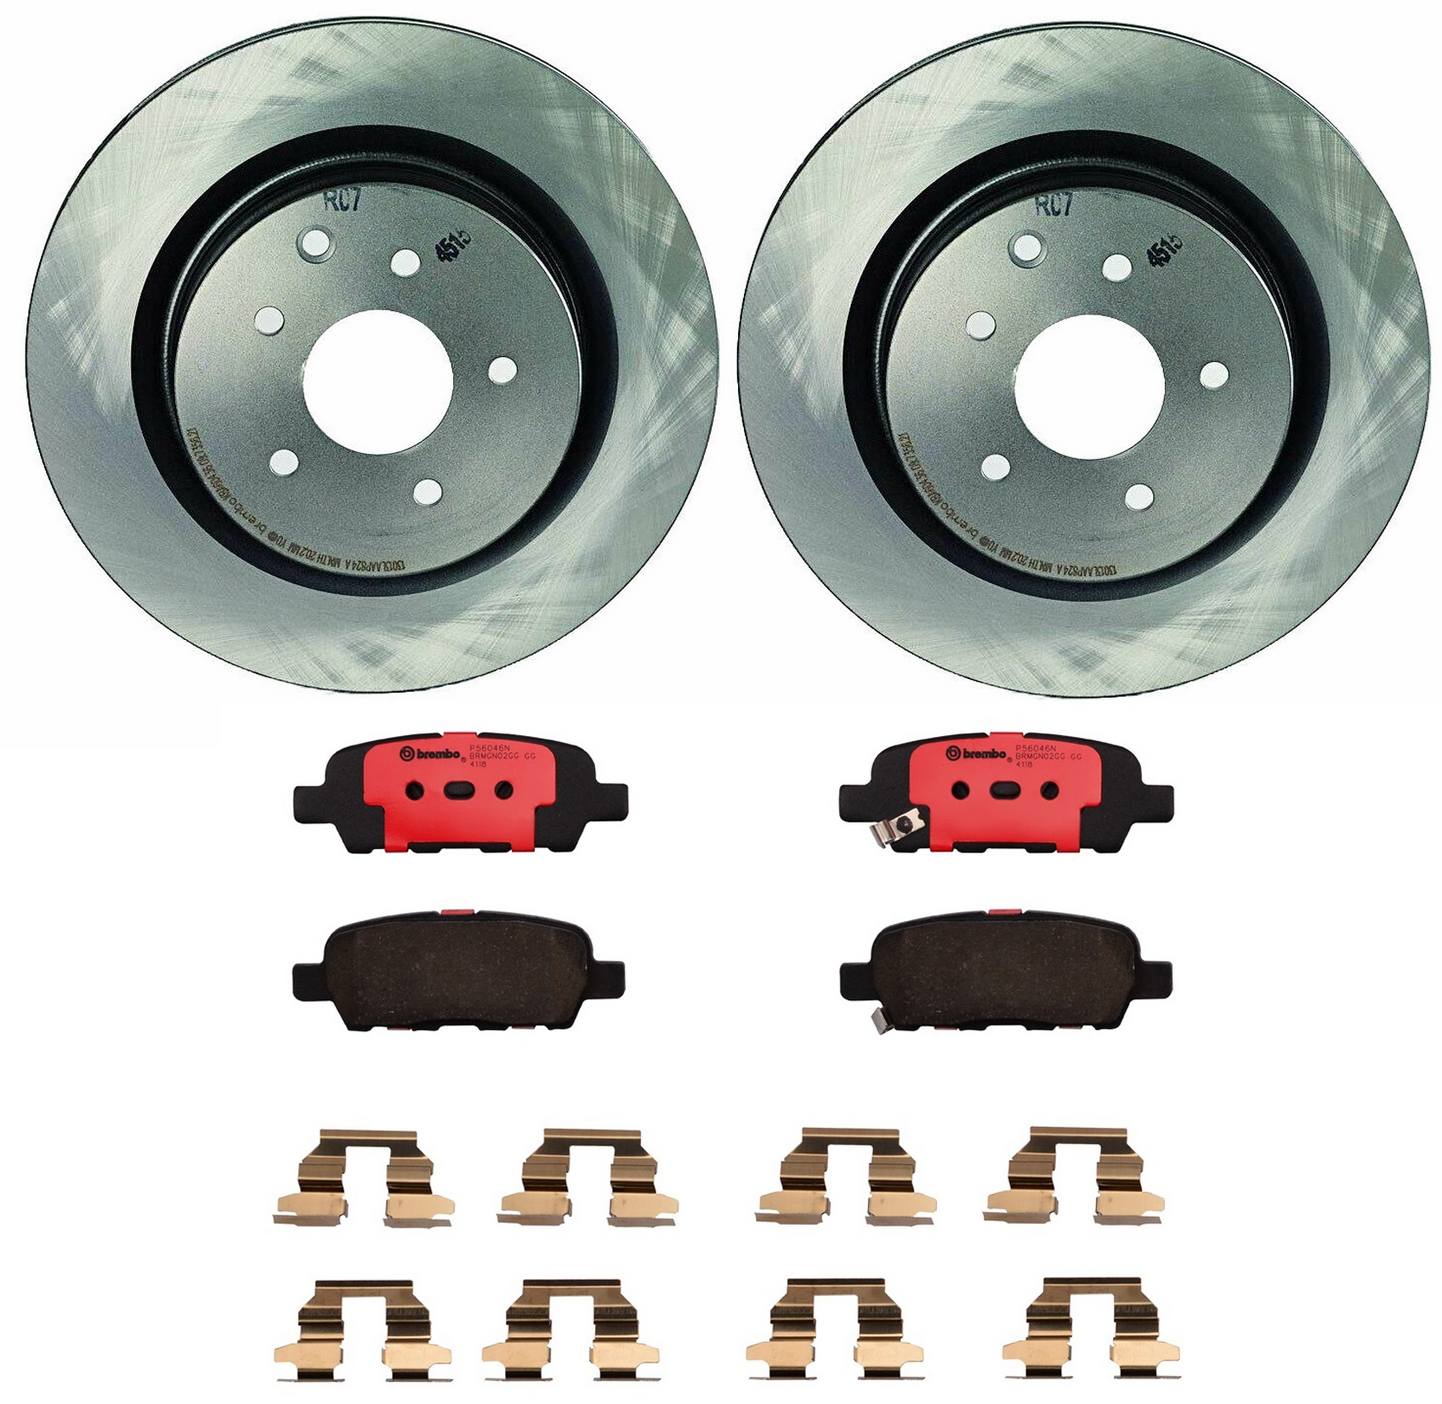 Nissan Disc Brake Pad and Rotor Kit - Rear (322mm) (Ceramic) Brembo